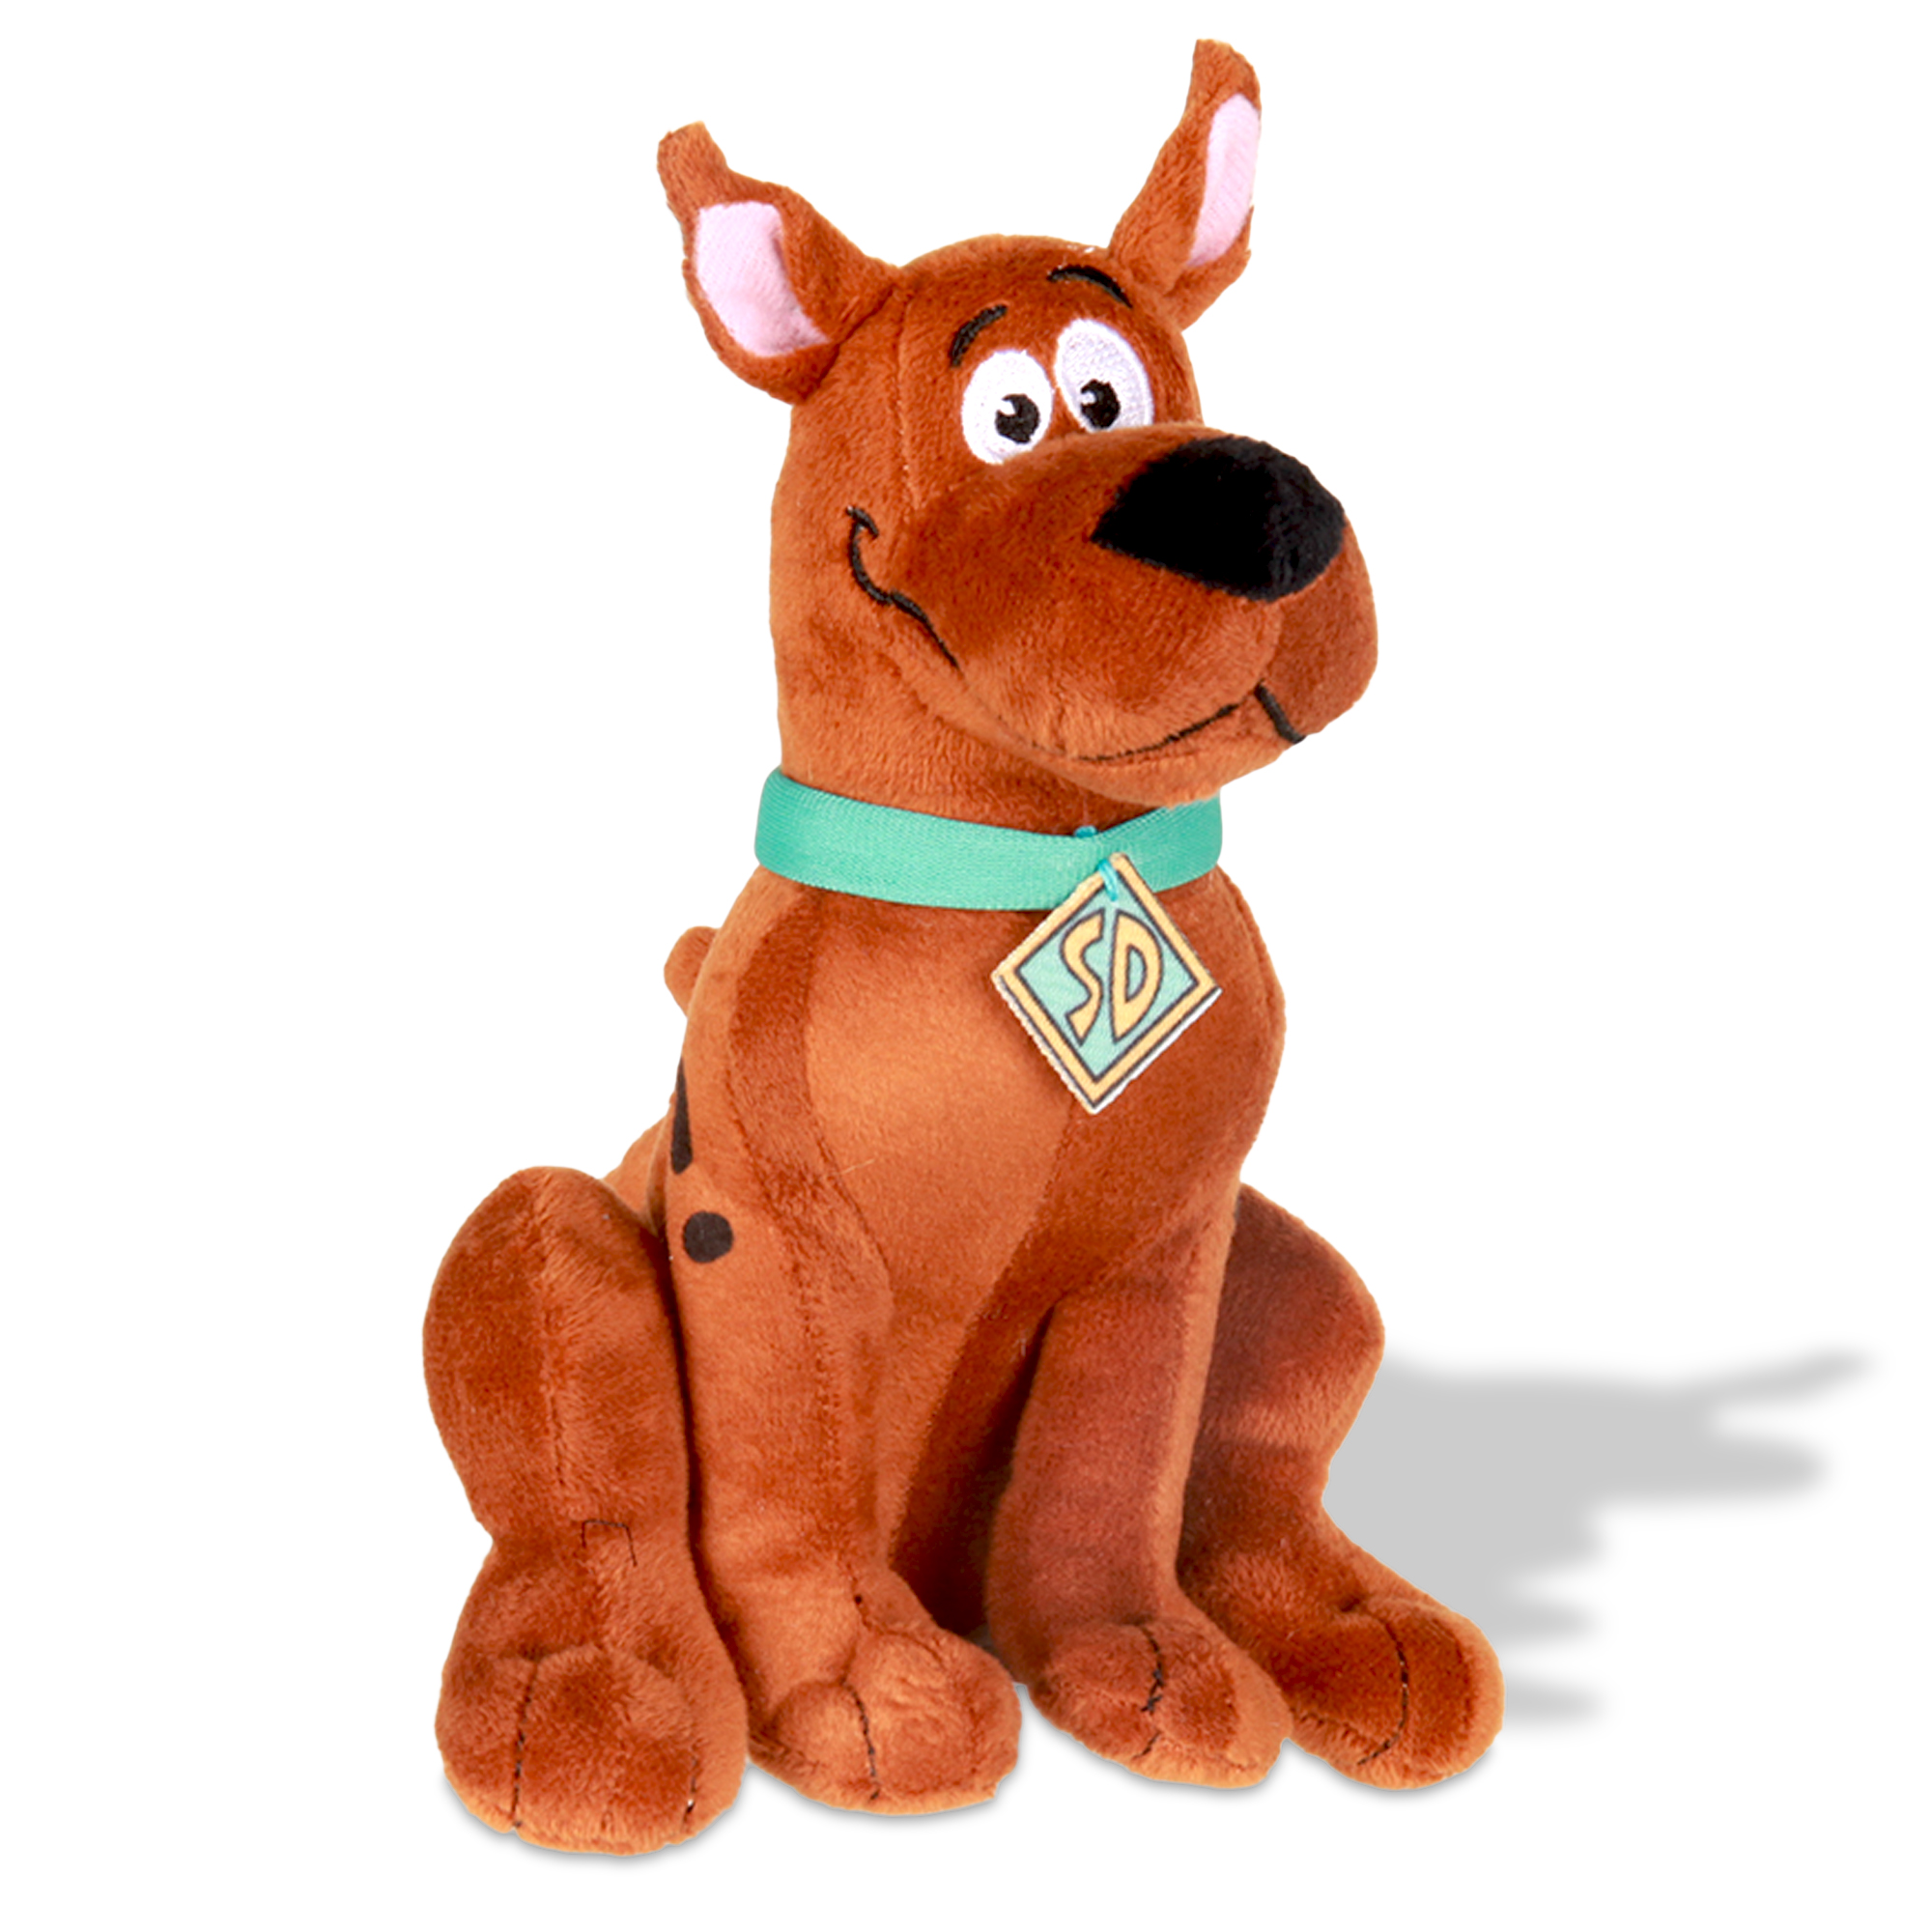 Dynomutt Scooby Doo Sitting Plush Figure 7"